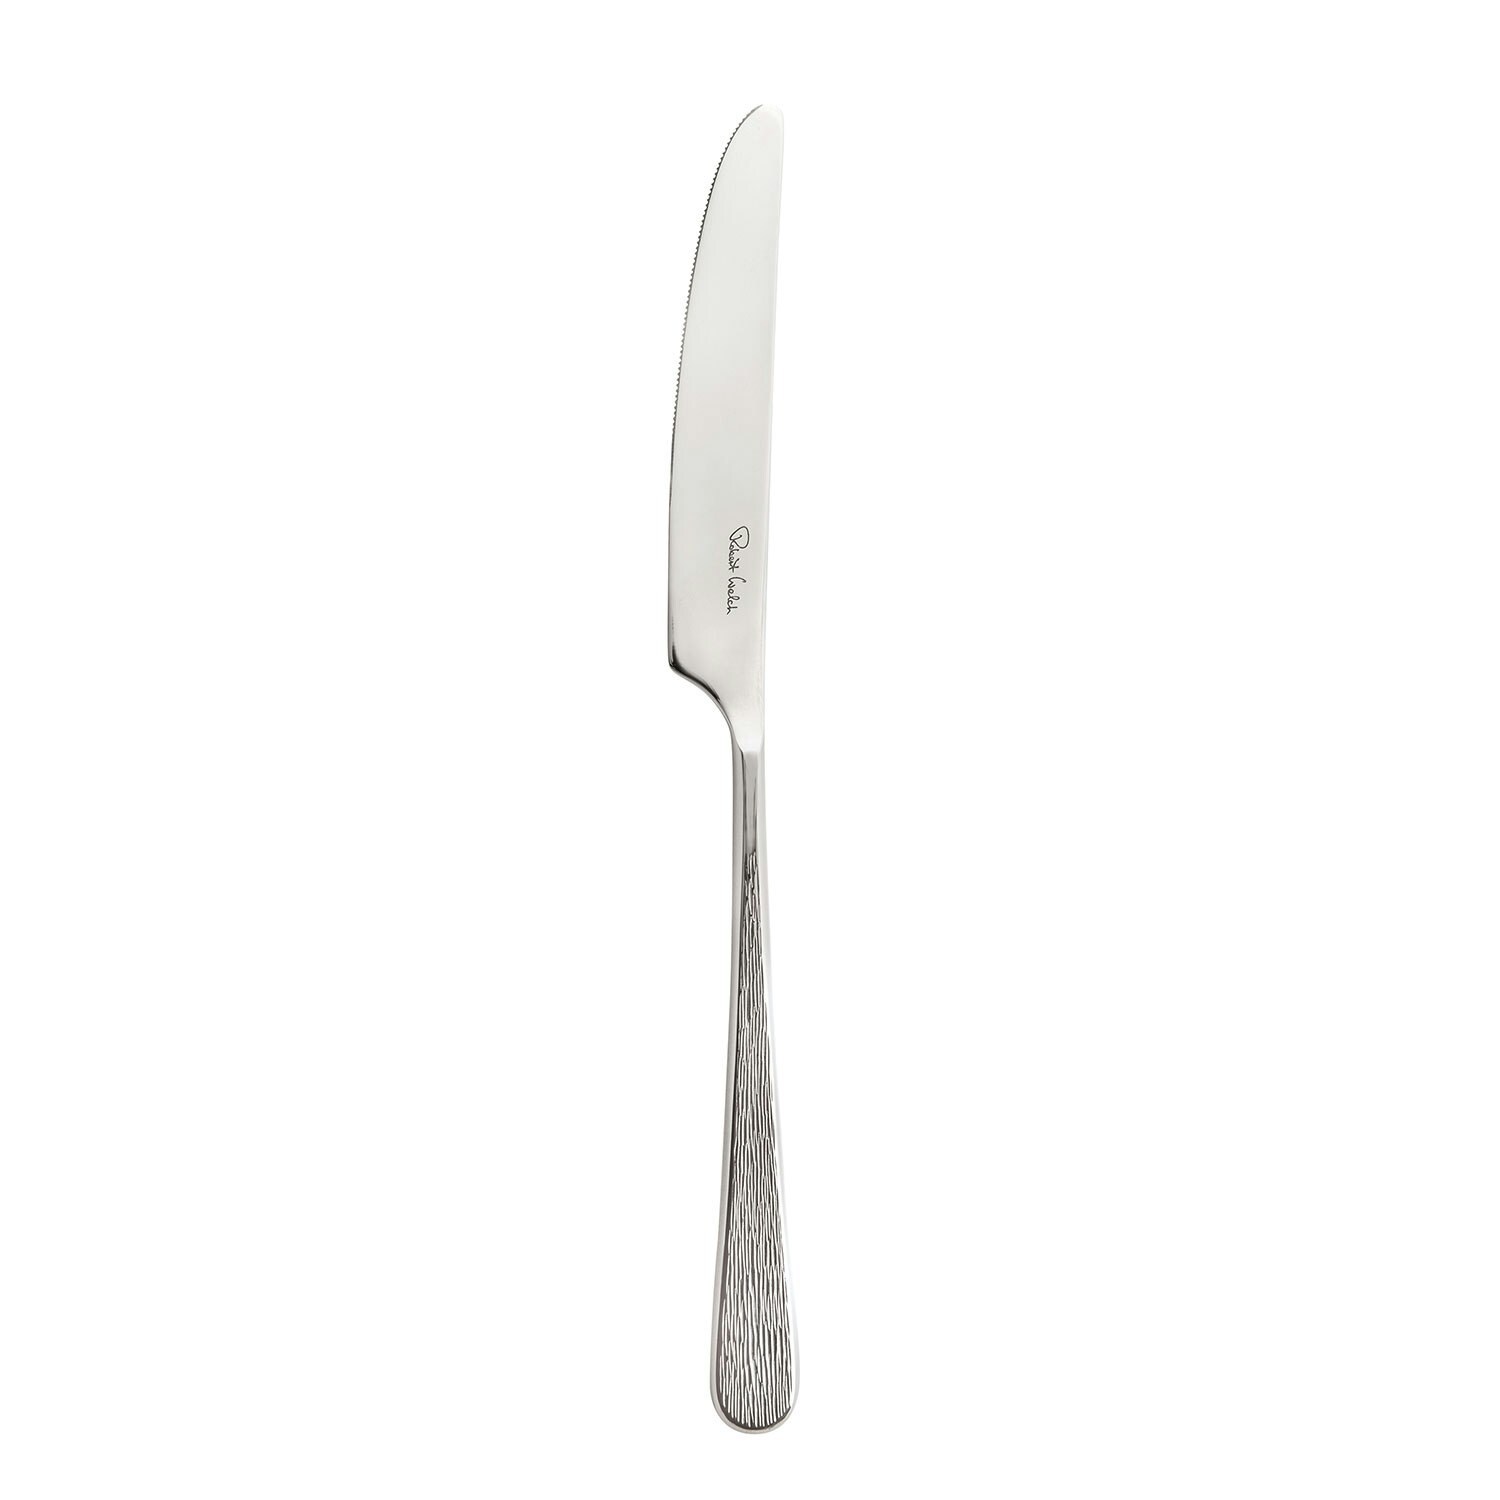 Essential Universal Scissors 21 cm - Fiskars @ RoyalDesign